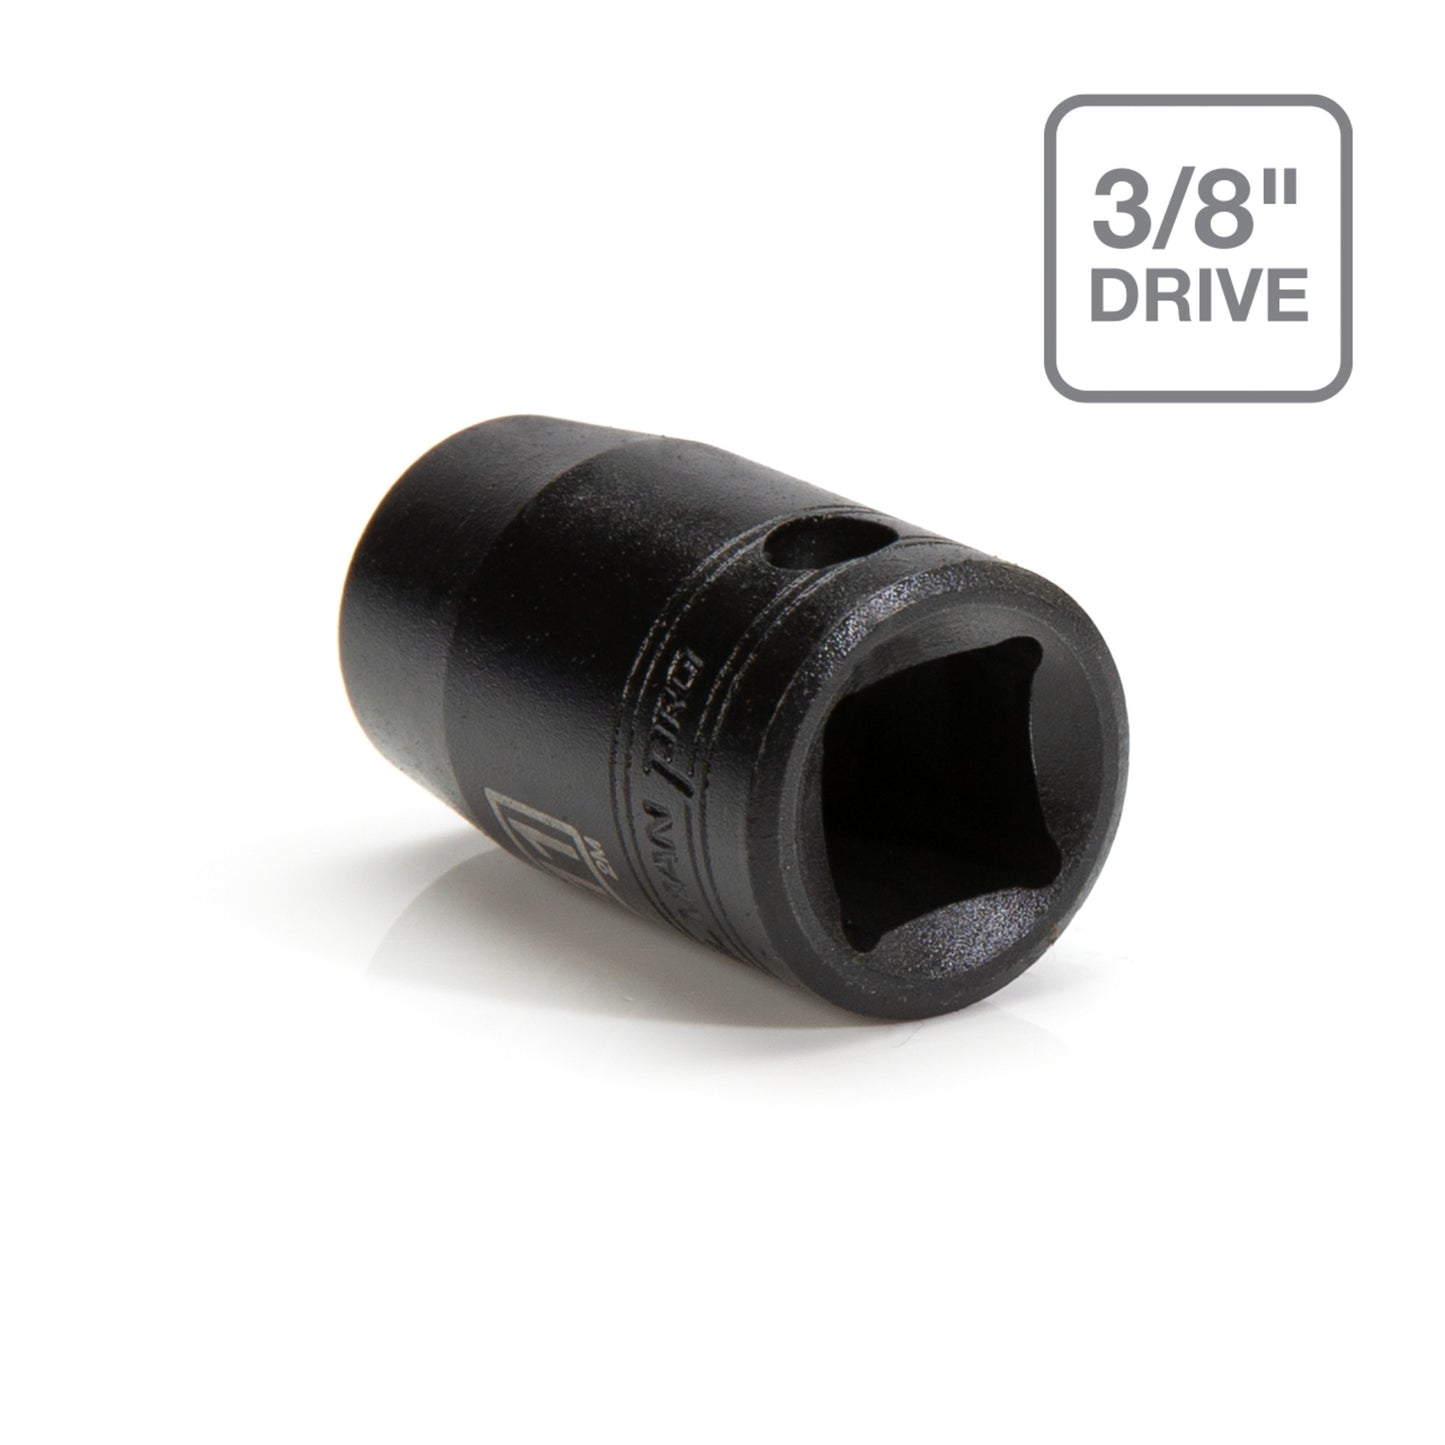 3/8-Inch Drive x 11mm 6-Point Impact Socket